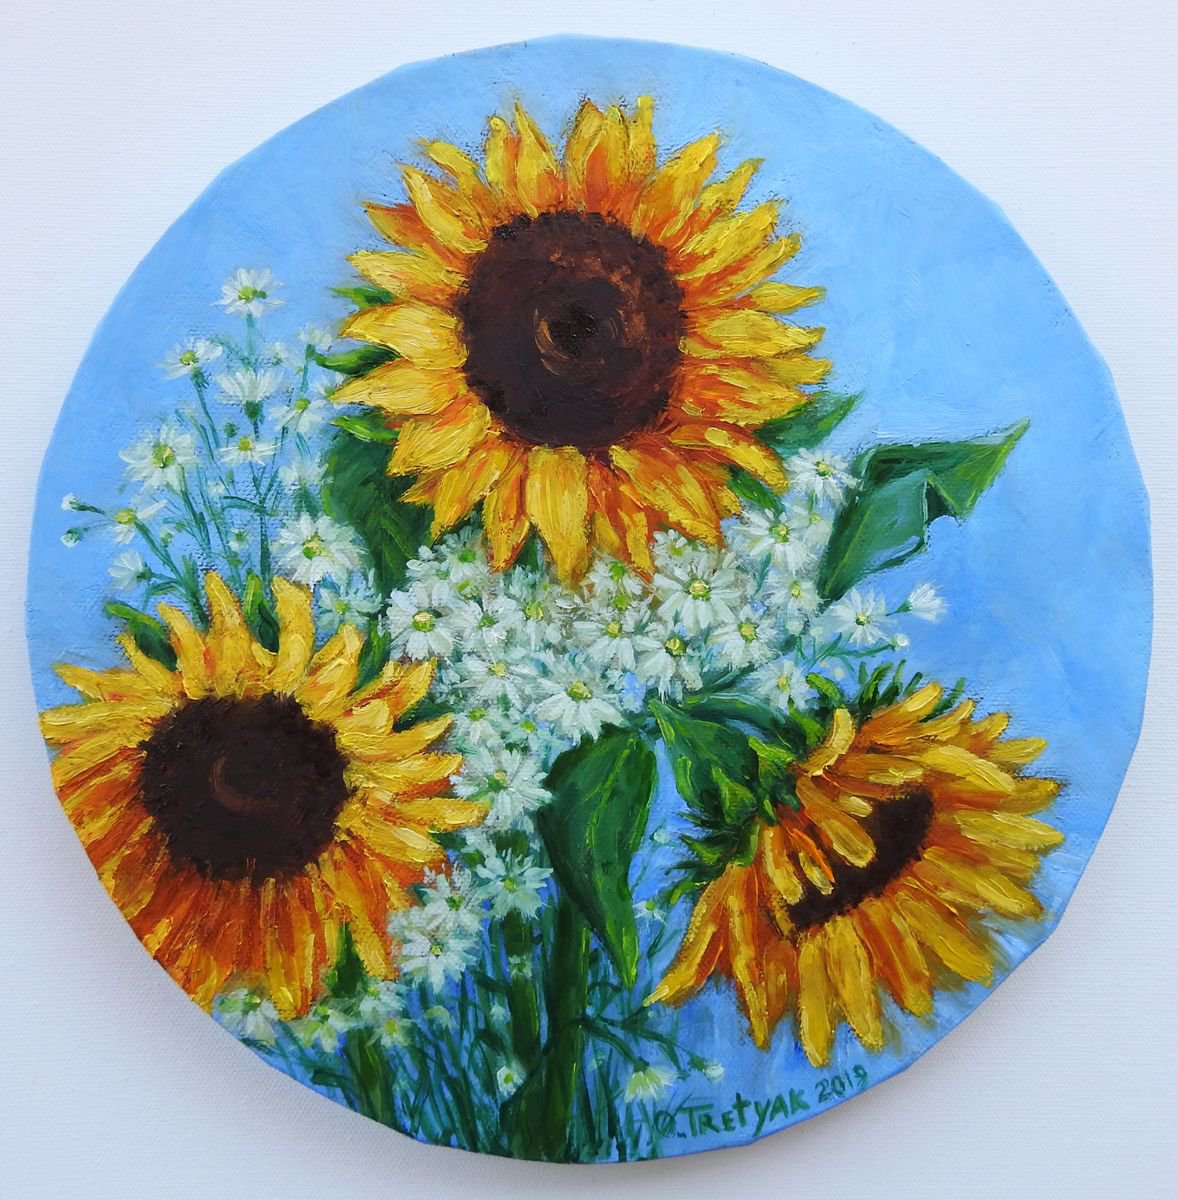 Sunny Sunflowers - Soul of Ukraine by Olga Tretyak